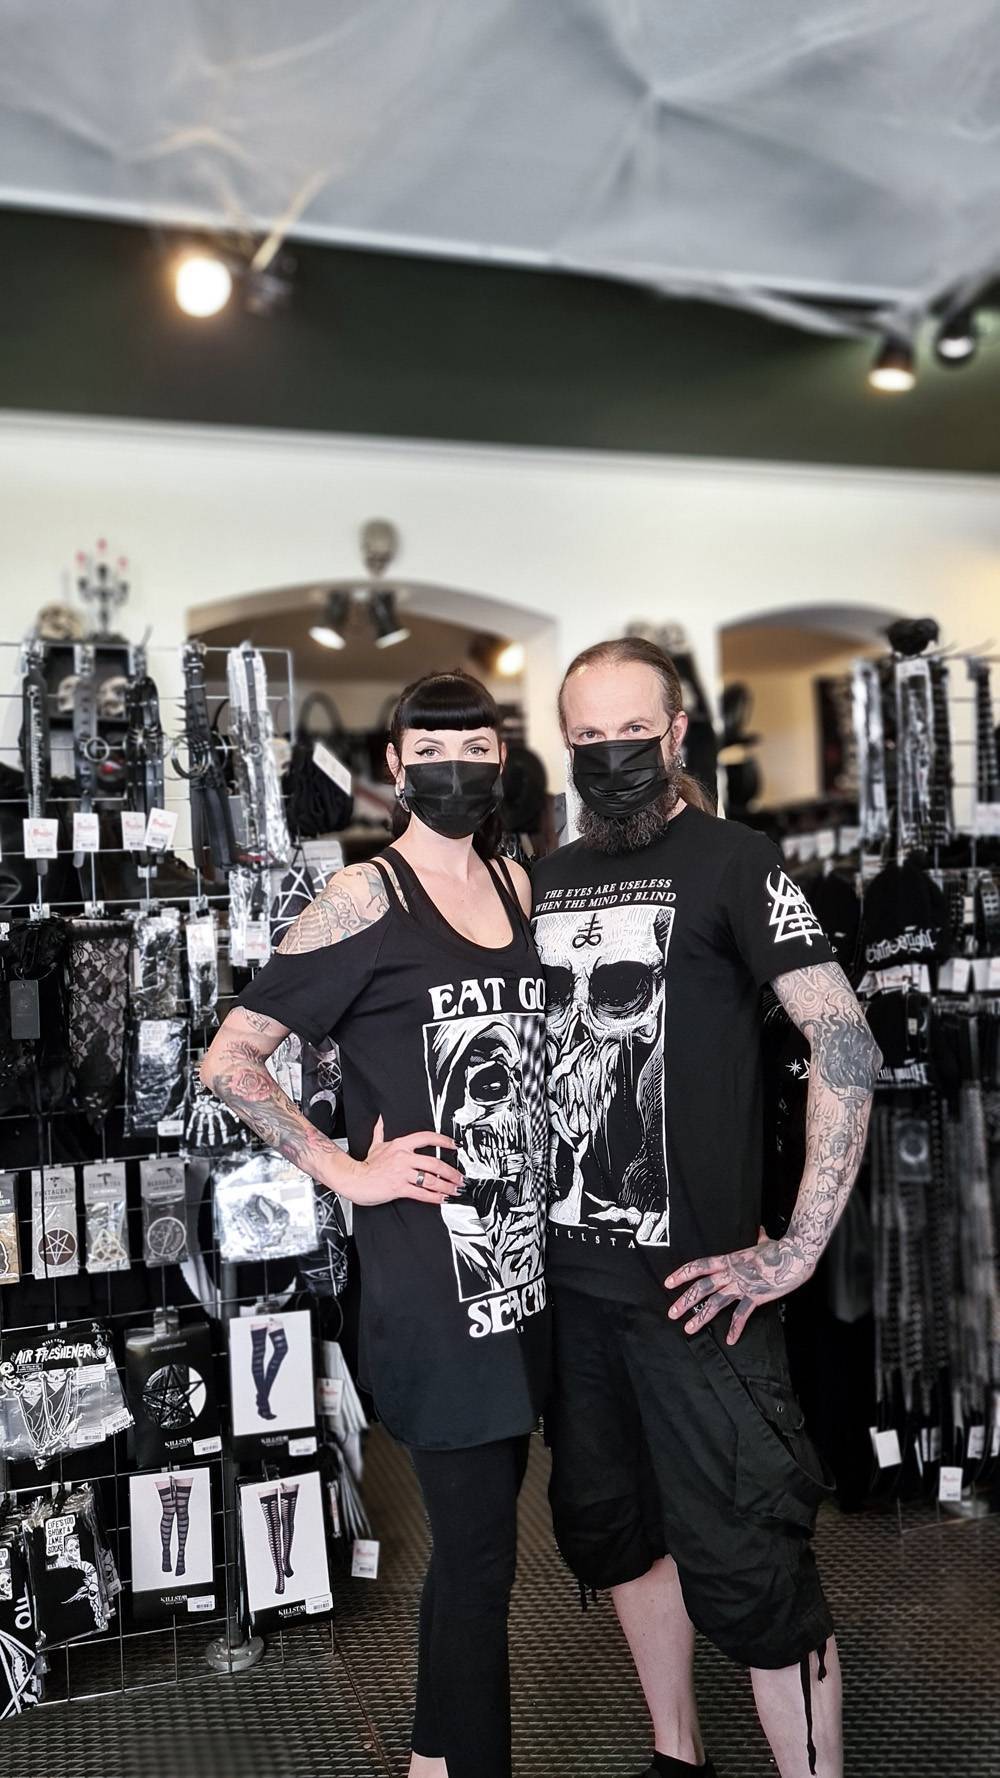 Abaddon Mystic Store Team wearing masks